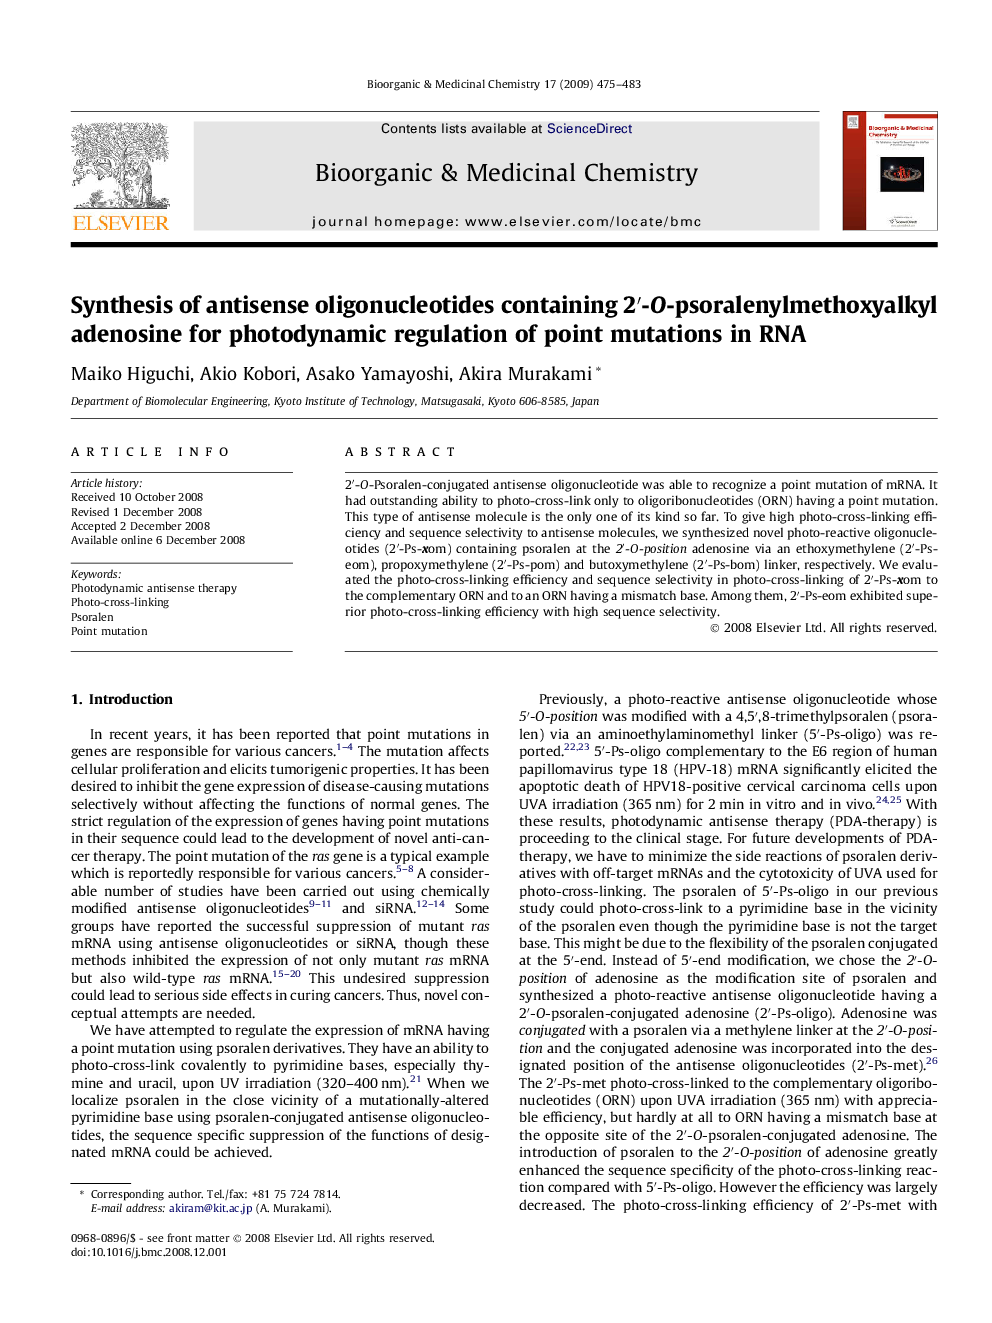 Synthesis of antisense oligonucleotides containing 2′-O-psoralenylmethoxyalkyl adenosine for photodynamic regulation of point mutations in RNA